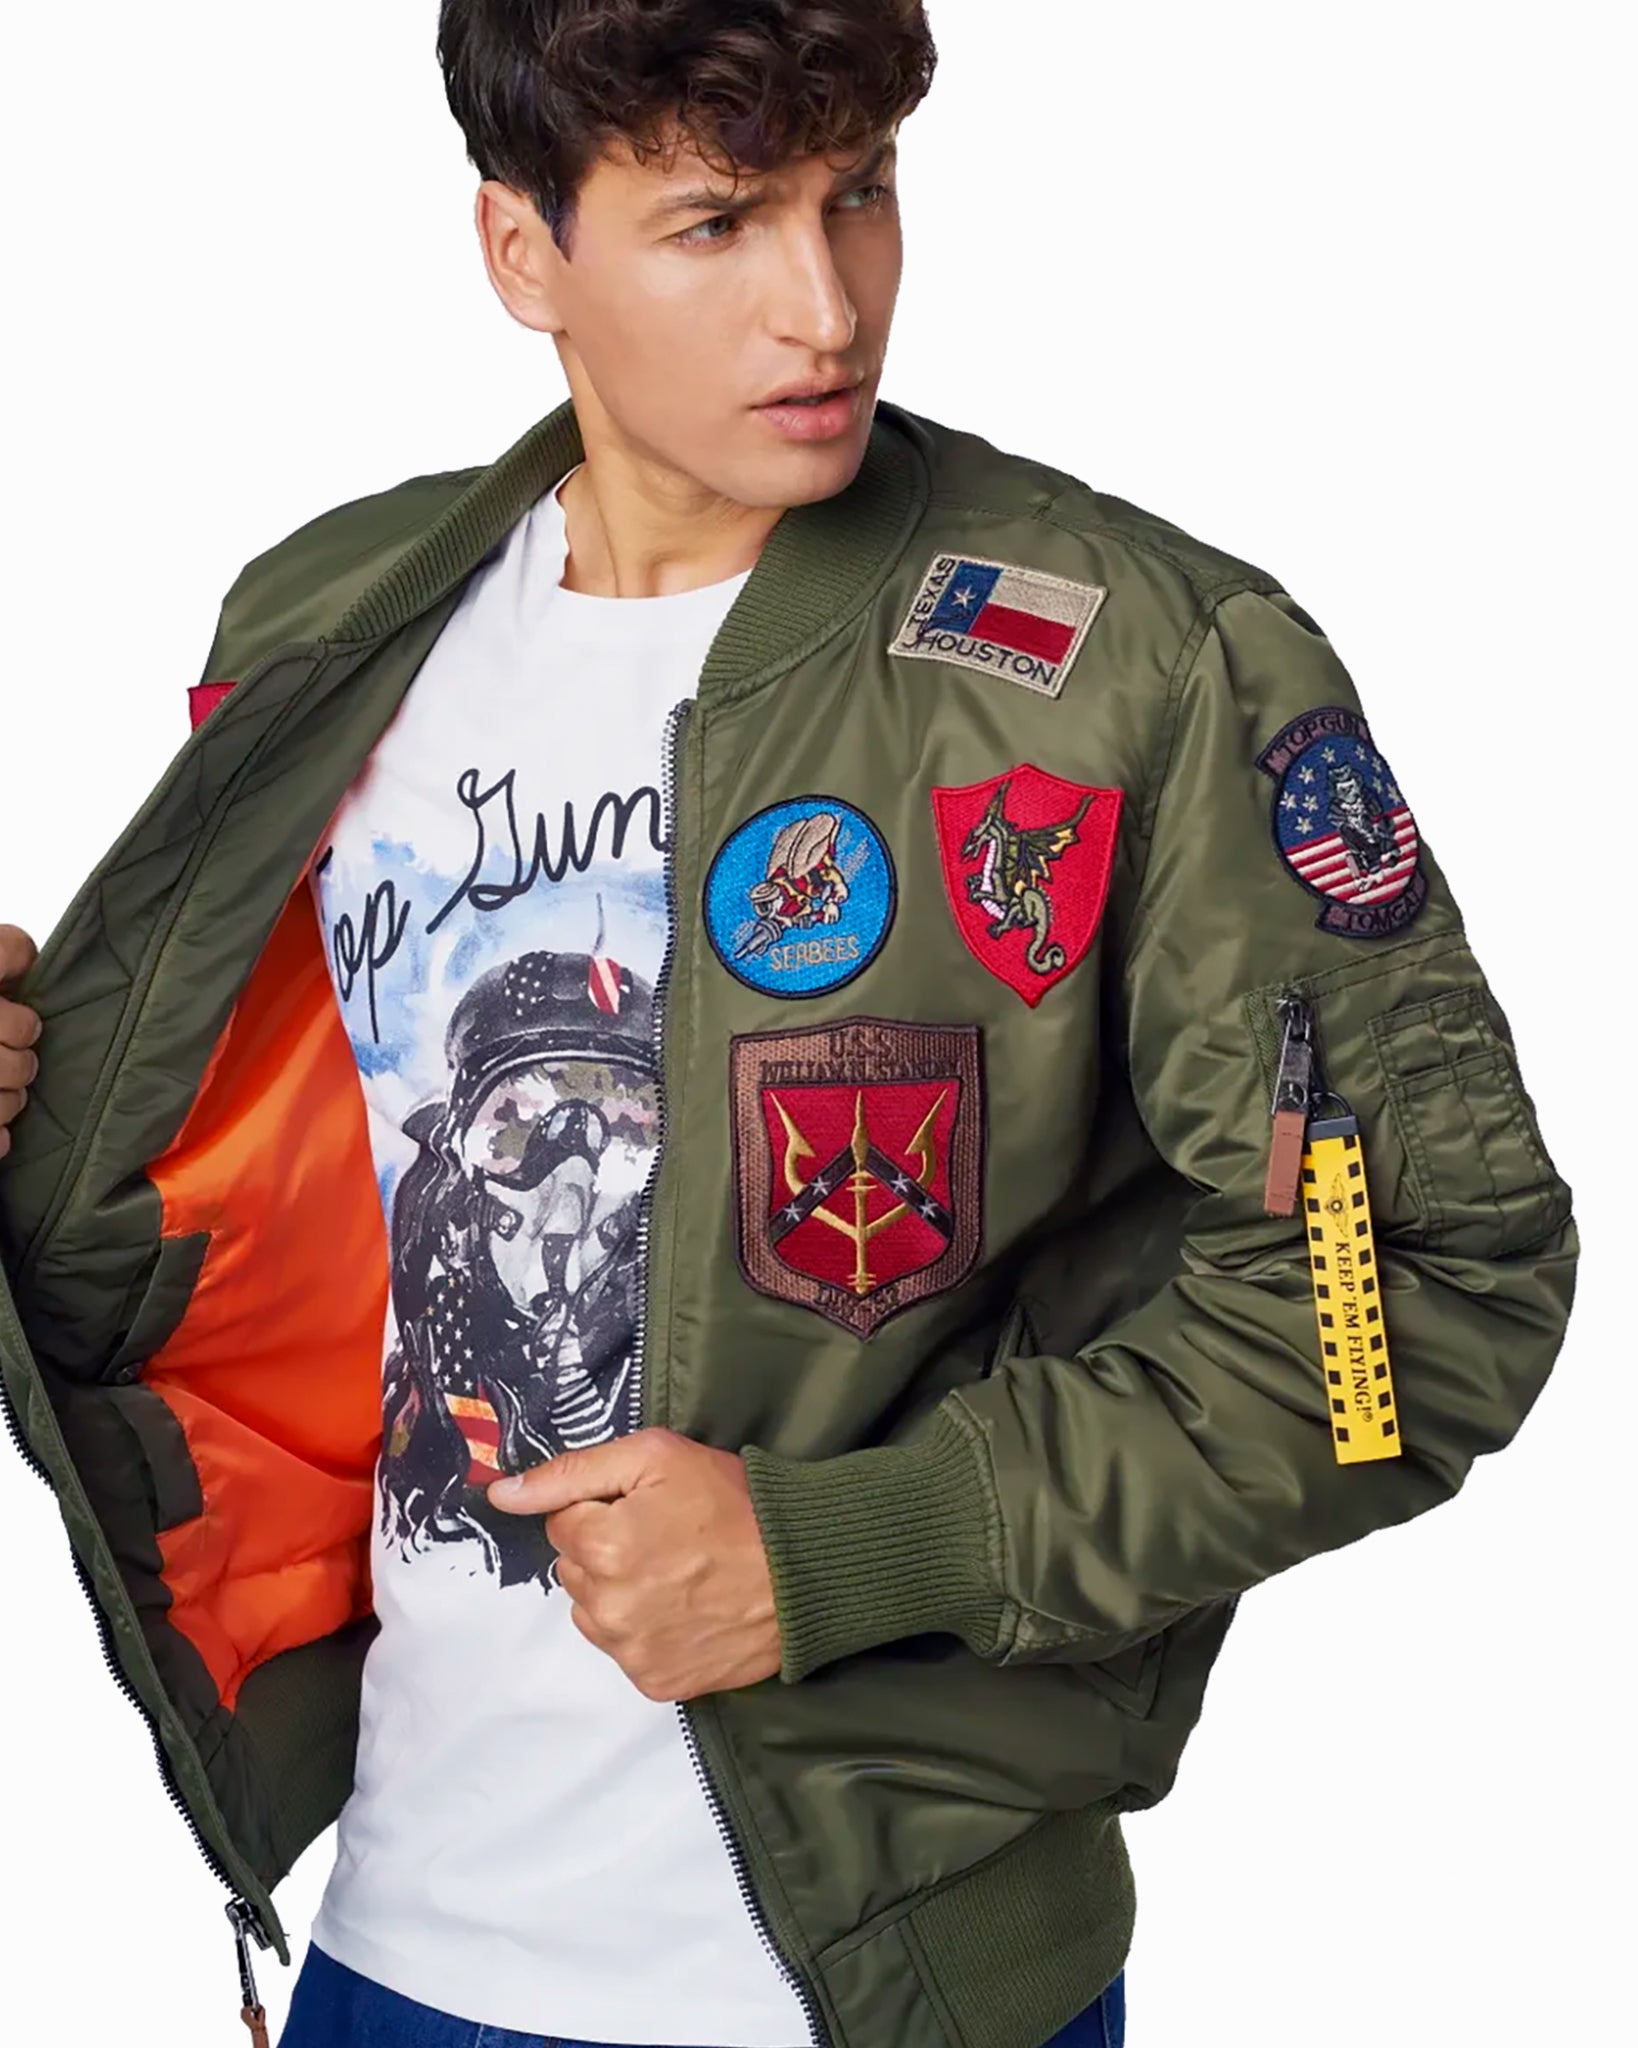 Official Top & Gun Clothing, Merchandise Men for Women Store: Jackets